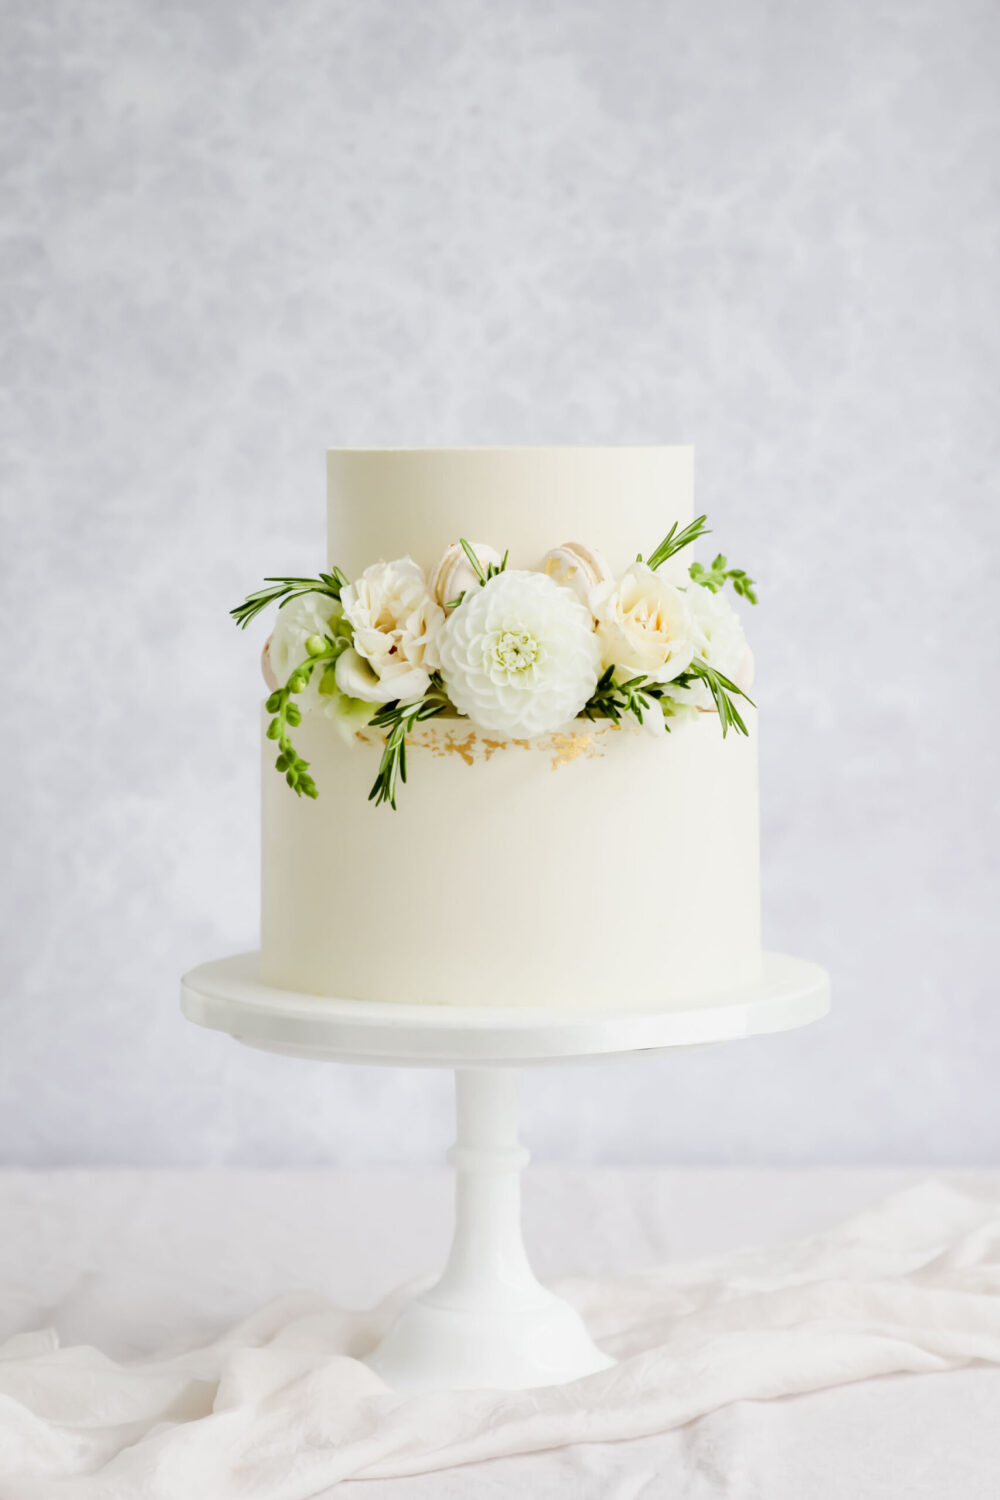 Blog - Should I Choose Fresh or Sugar Flowers for My Wedding Cake? - Cove  Cake Design | Luxury Wedding Cakes - Ireland